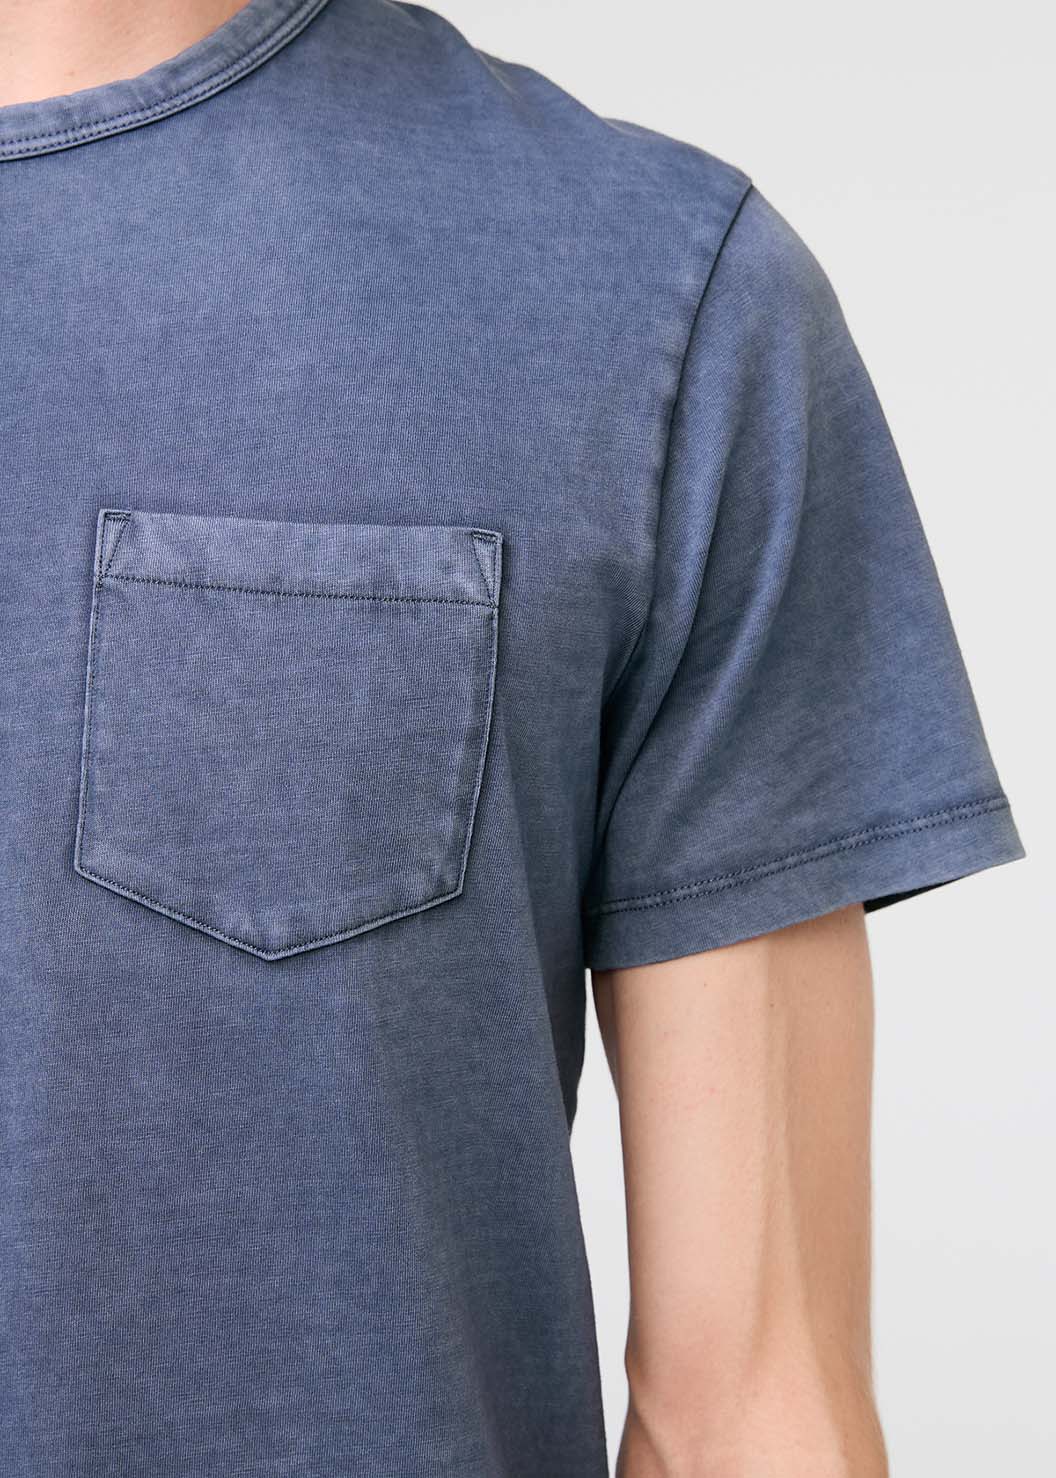 mens pima cotton vintage style blue t-shirt pocket